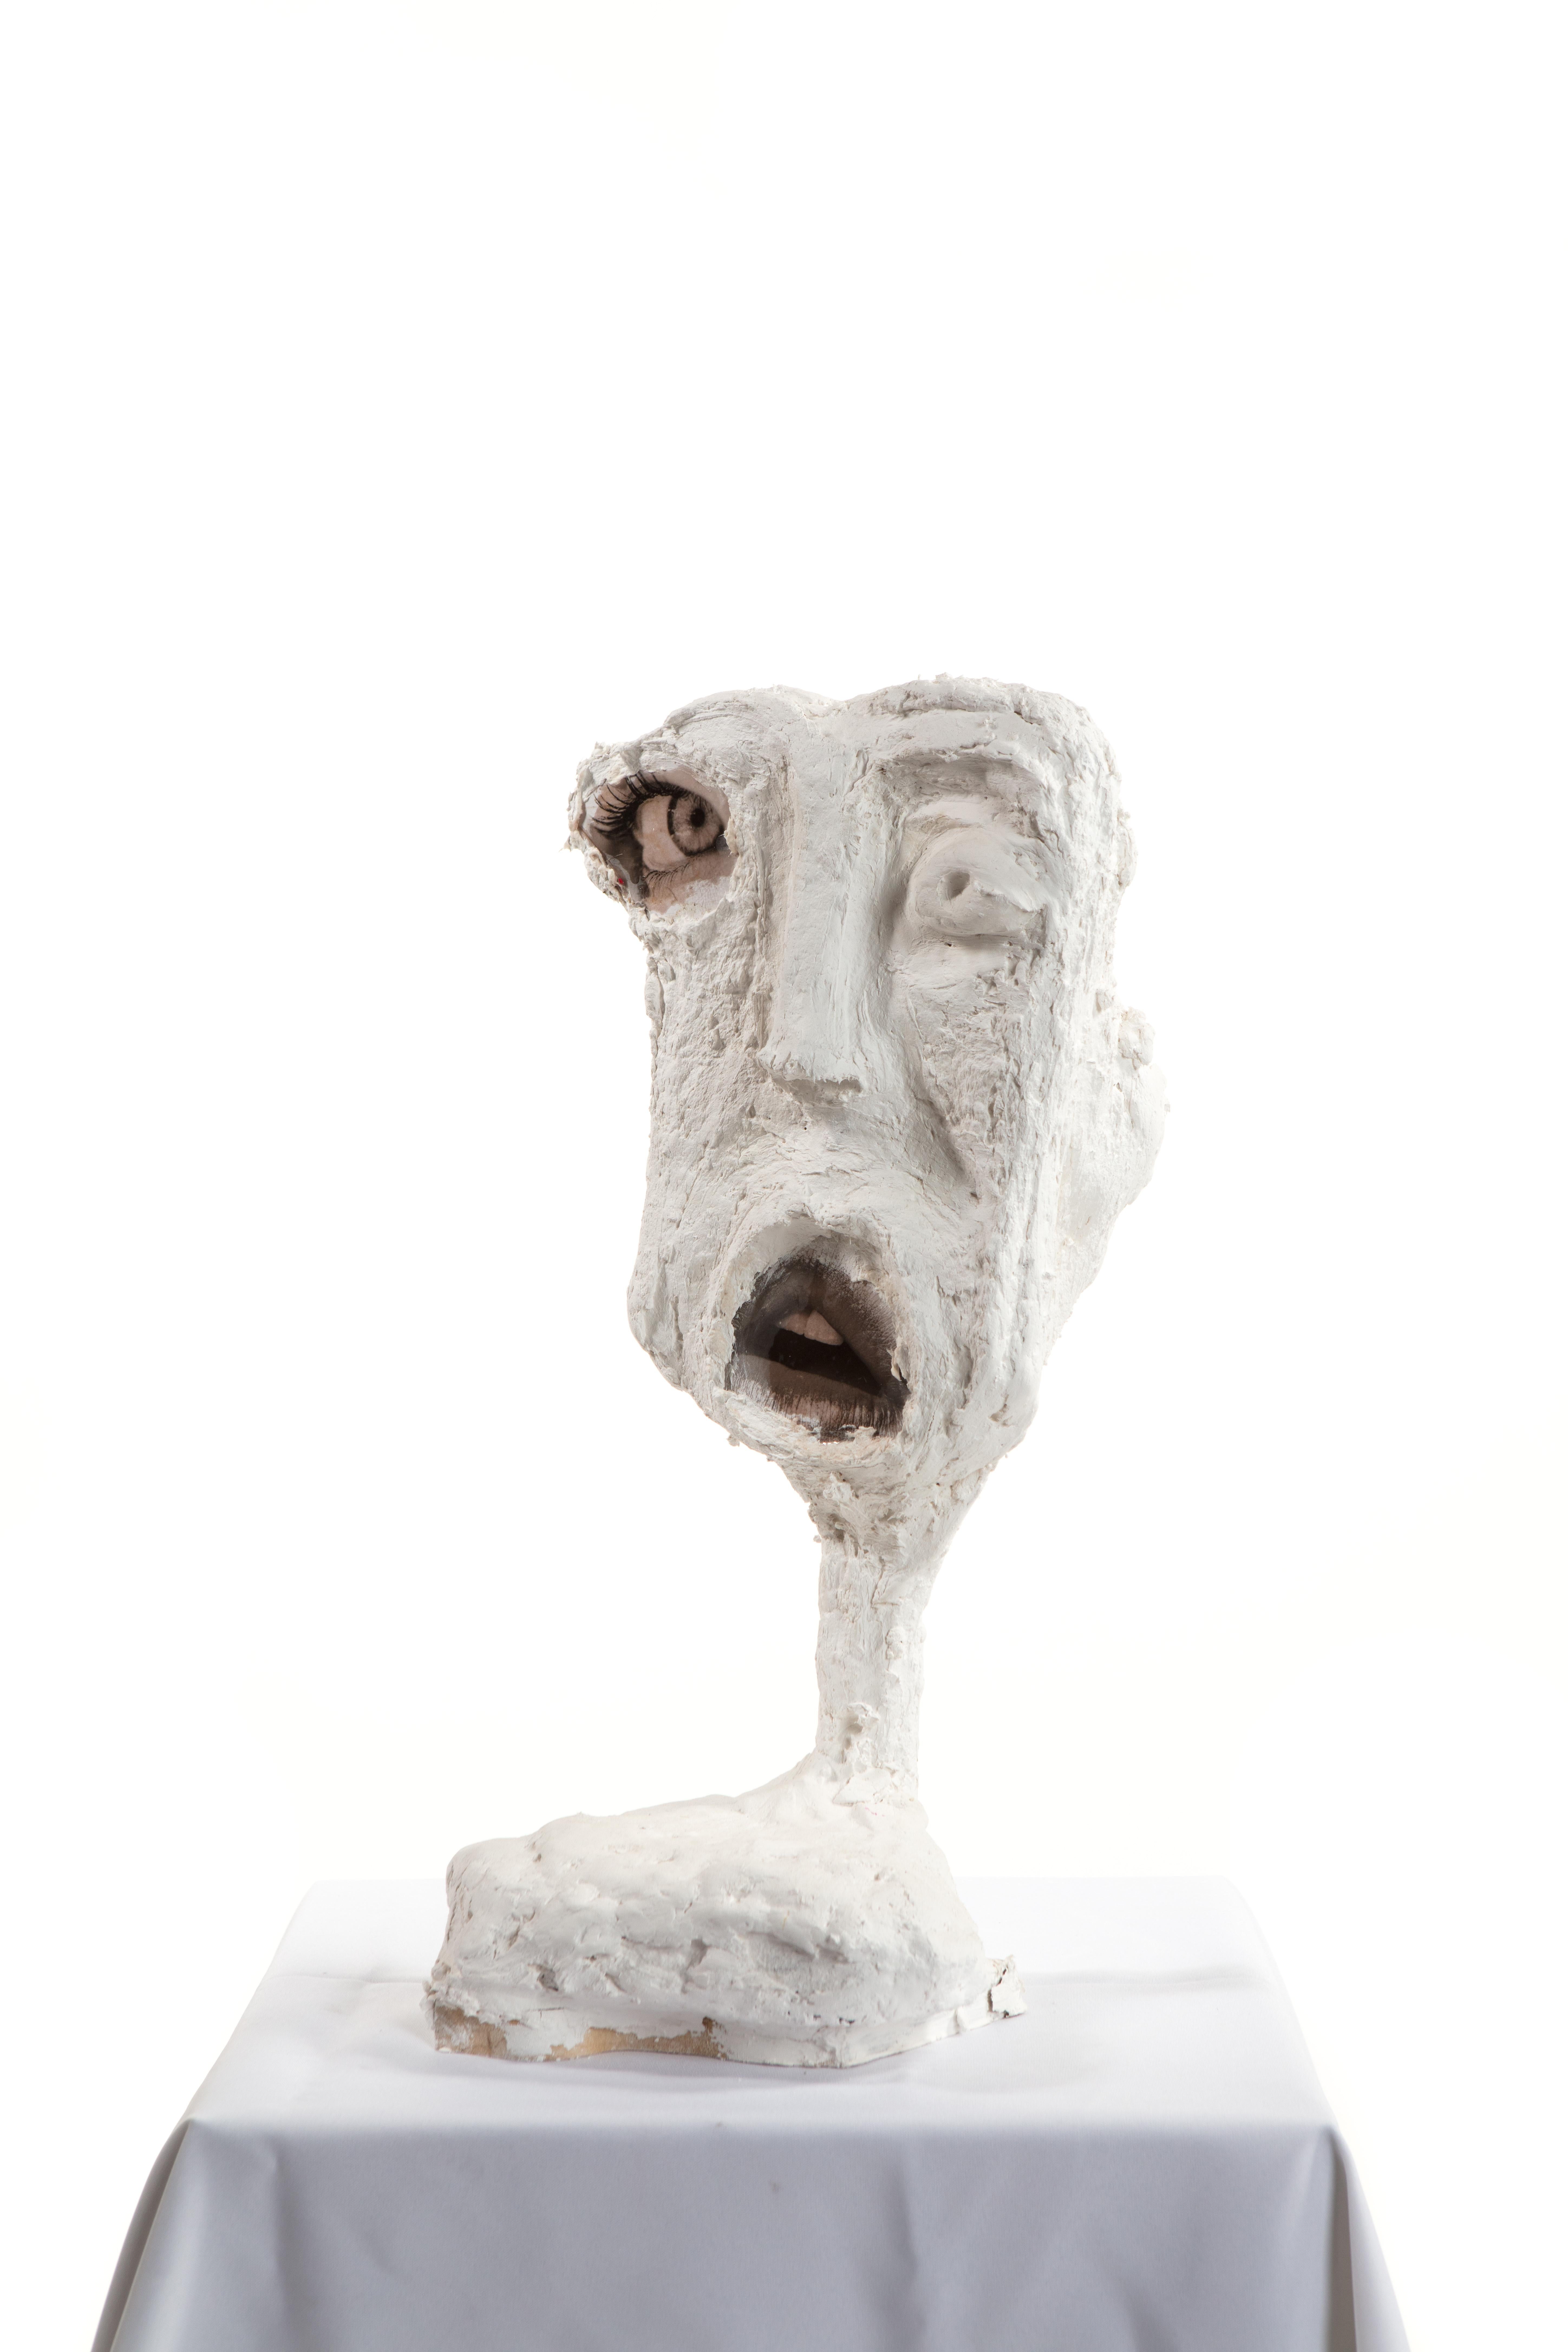 American White Plaster Sculptural Figure Face, 21st Century by Mattia Biagi